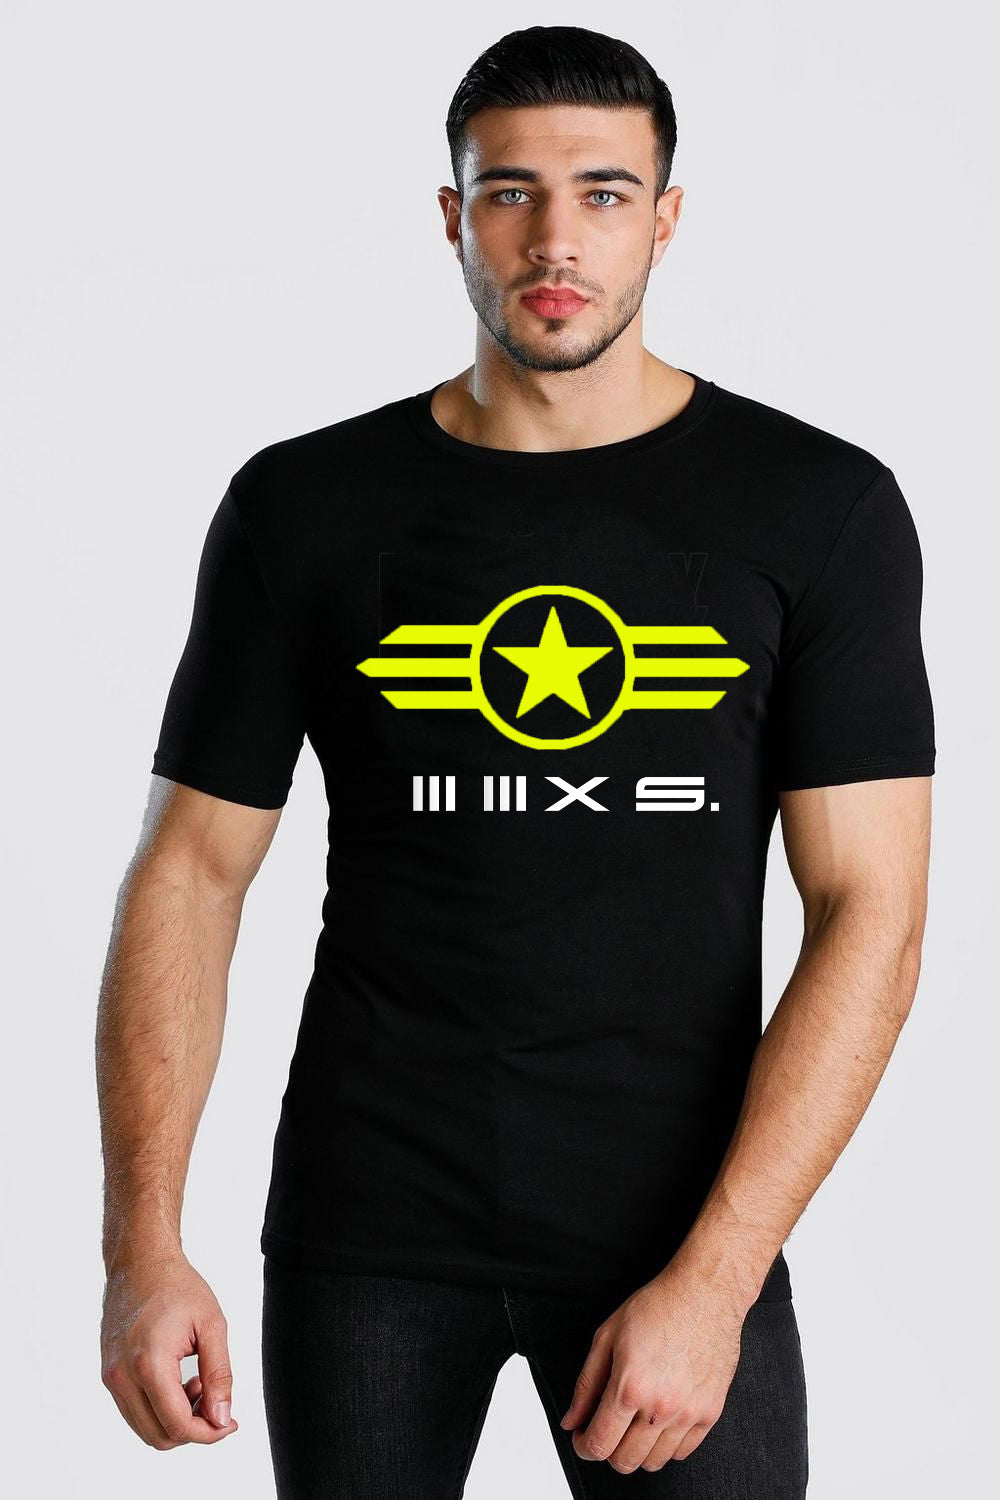 ARMY logo Black short sleeve tshirt